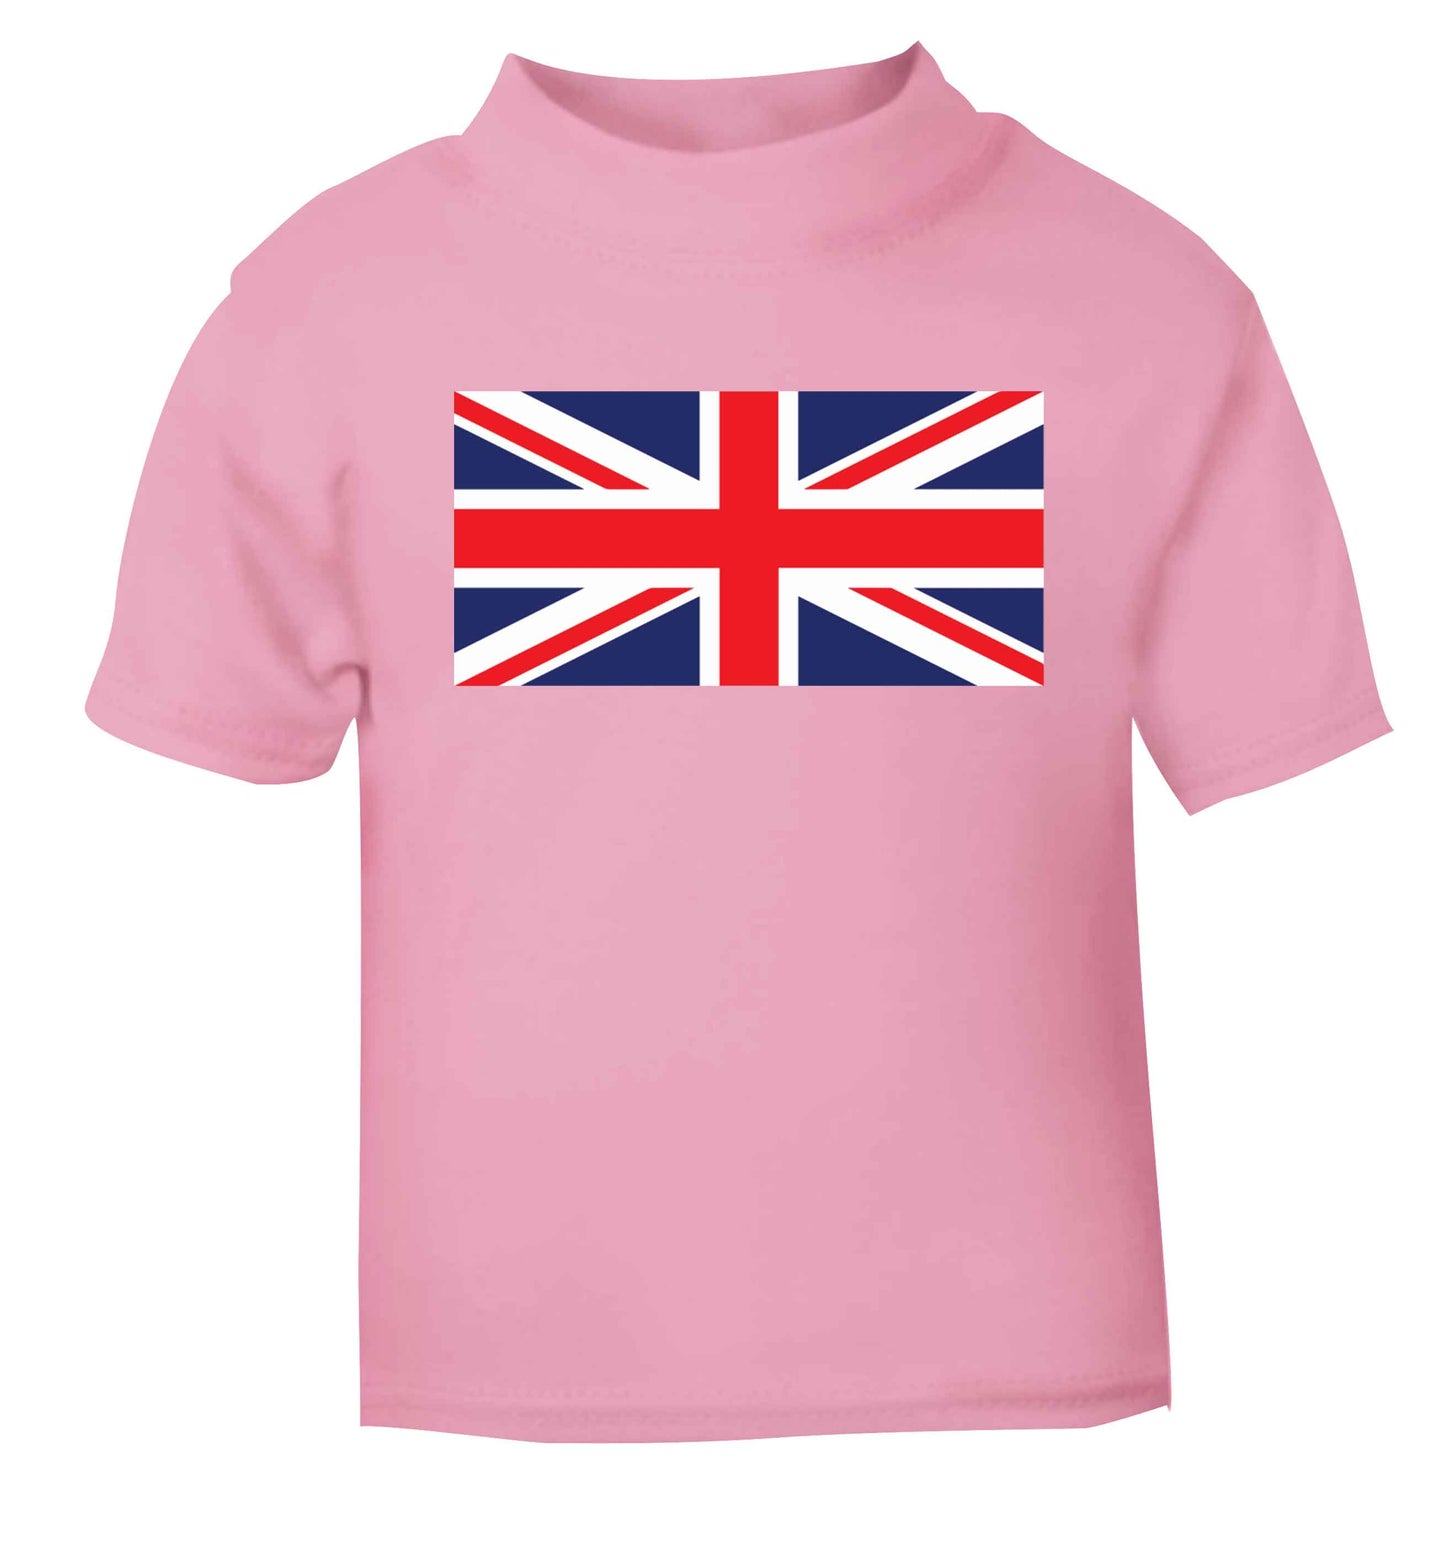 Union Jack light pink baby toddler Tshirt 2 Years